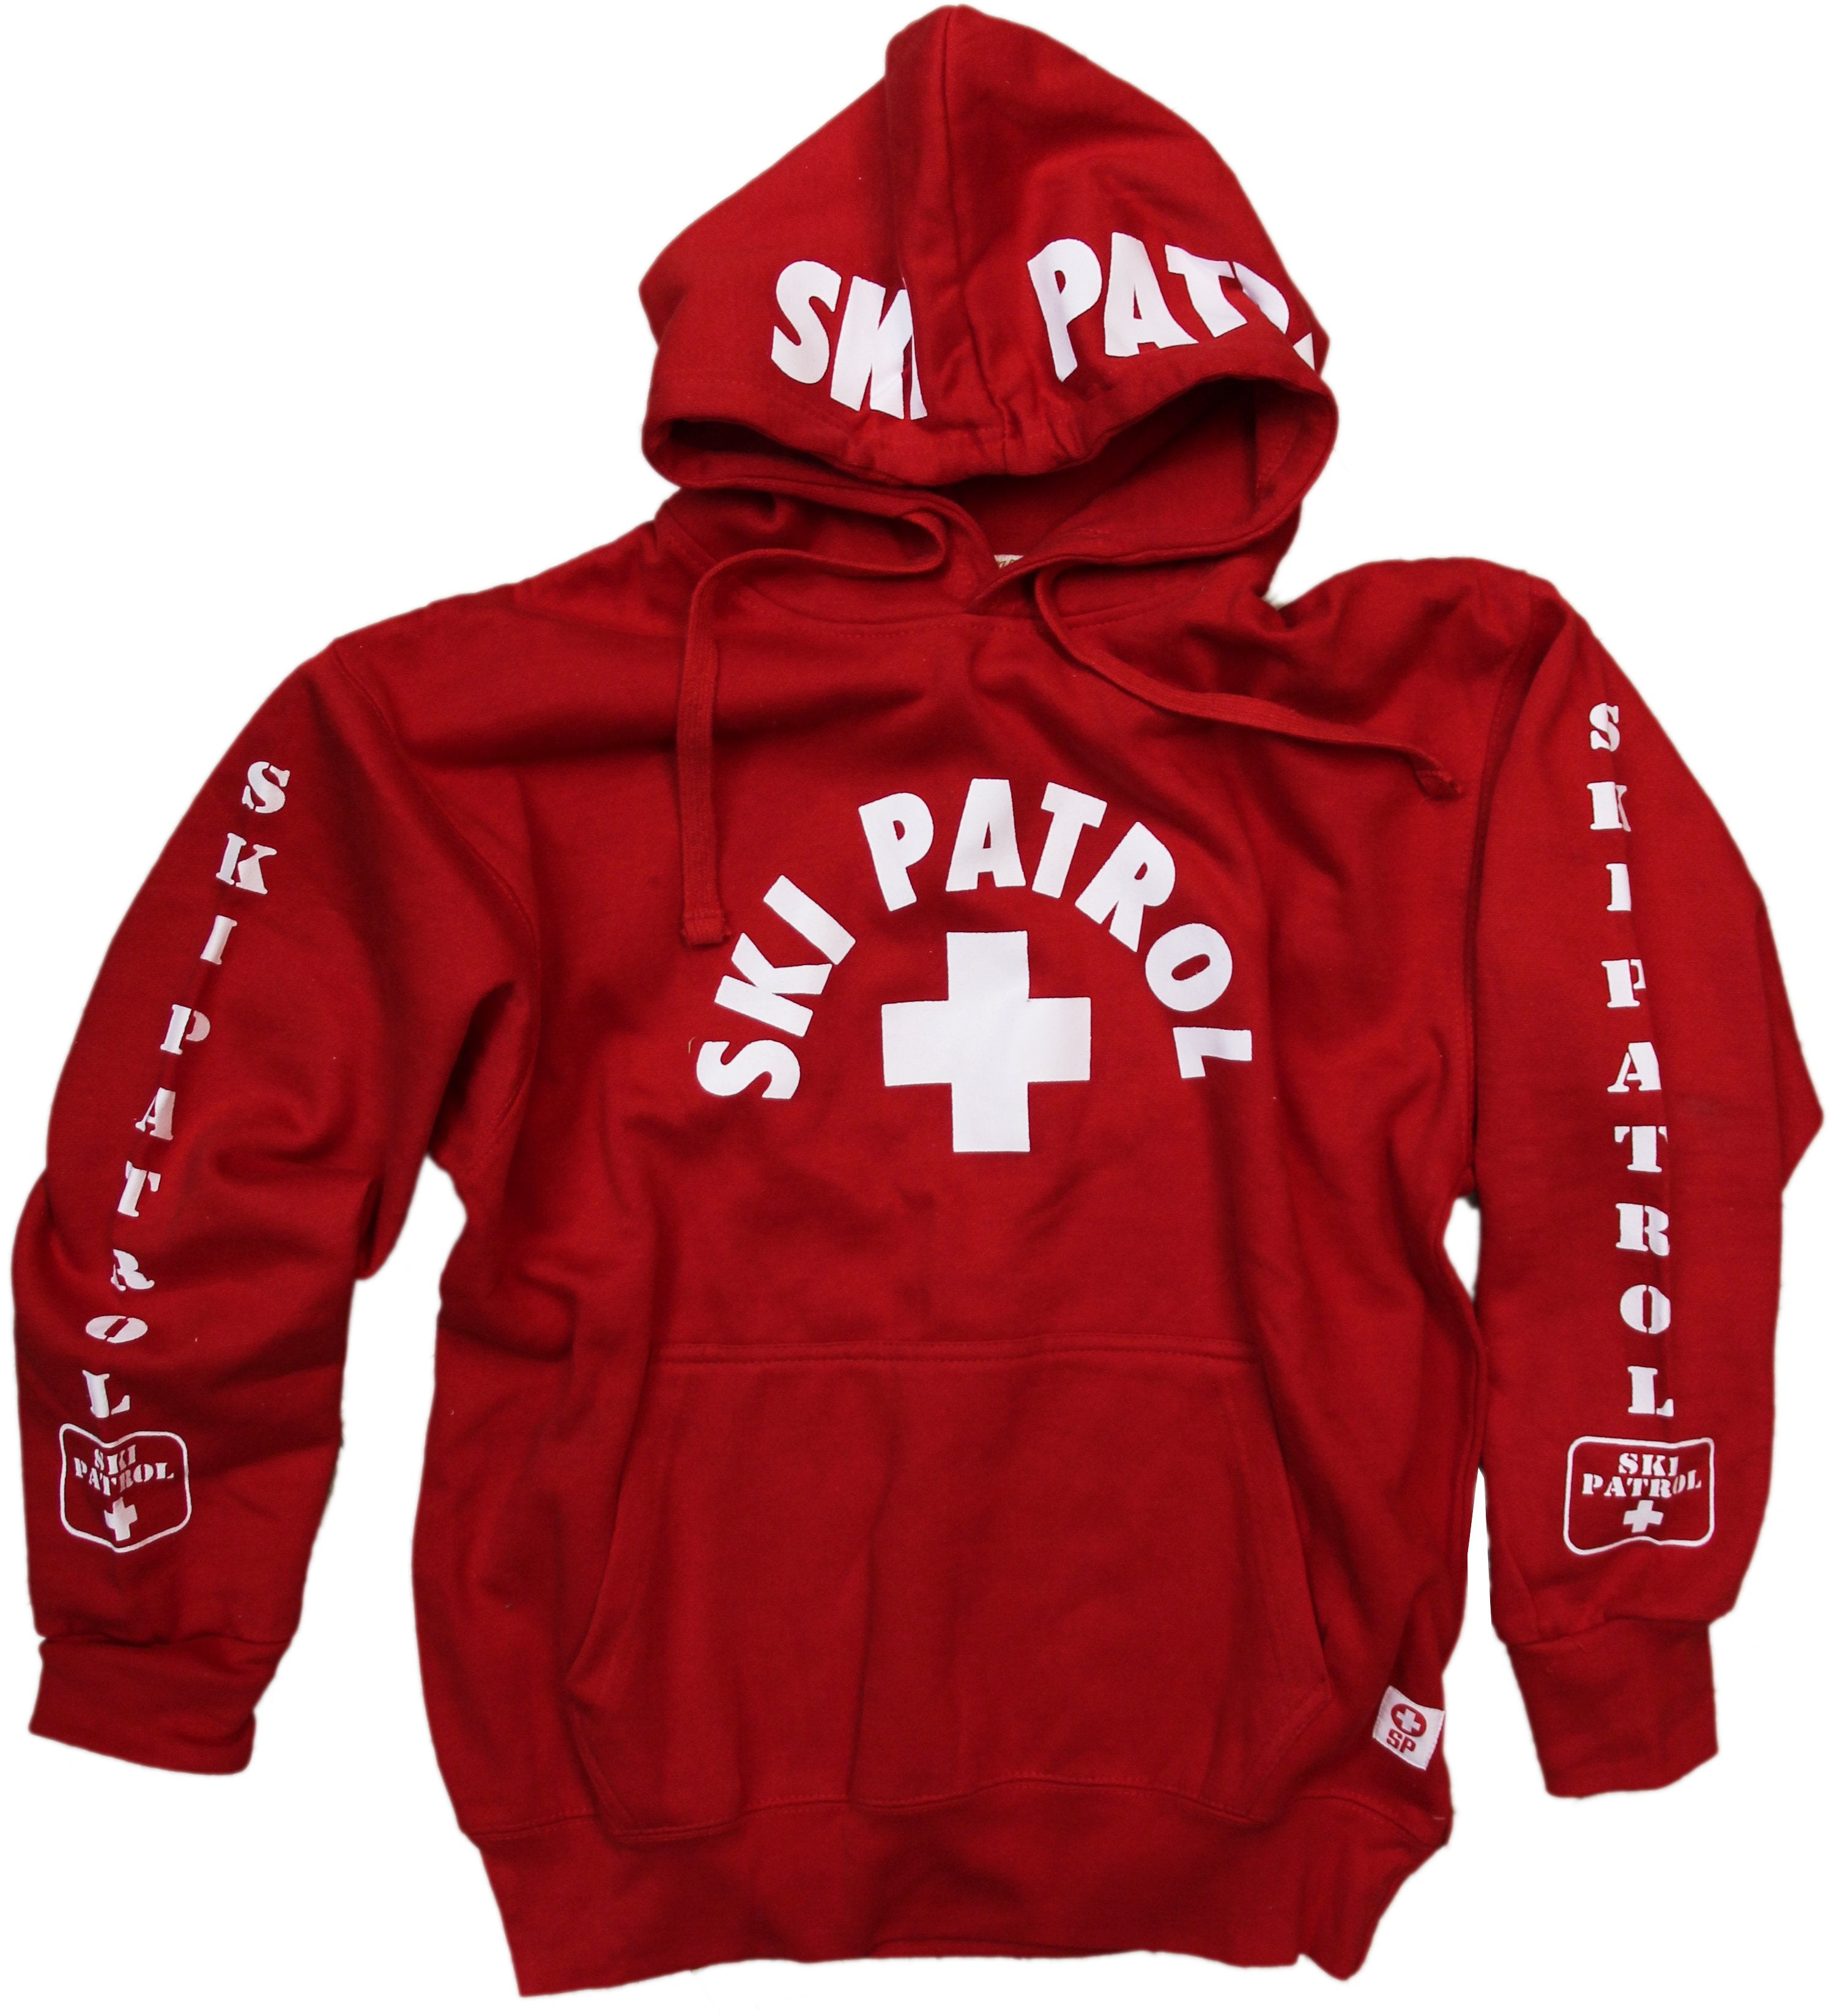 SKI PATROL Sweatshirt Red Hoodie Guard Patrol Shirt Gift Red White Skiing Coat